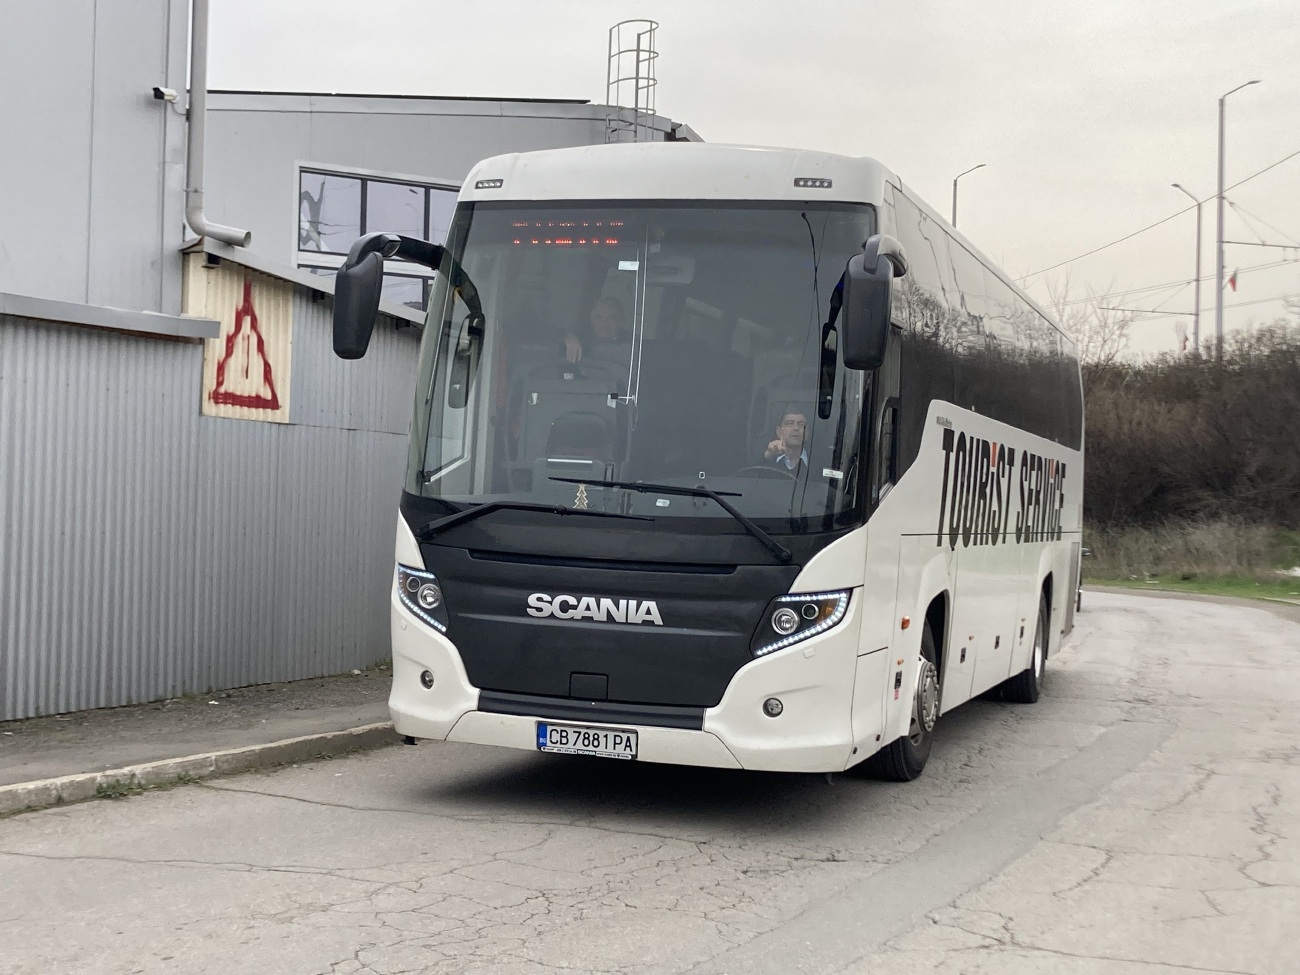 Sofia, Scania Touring HD (Higer A80T) # 7881